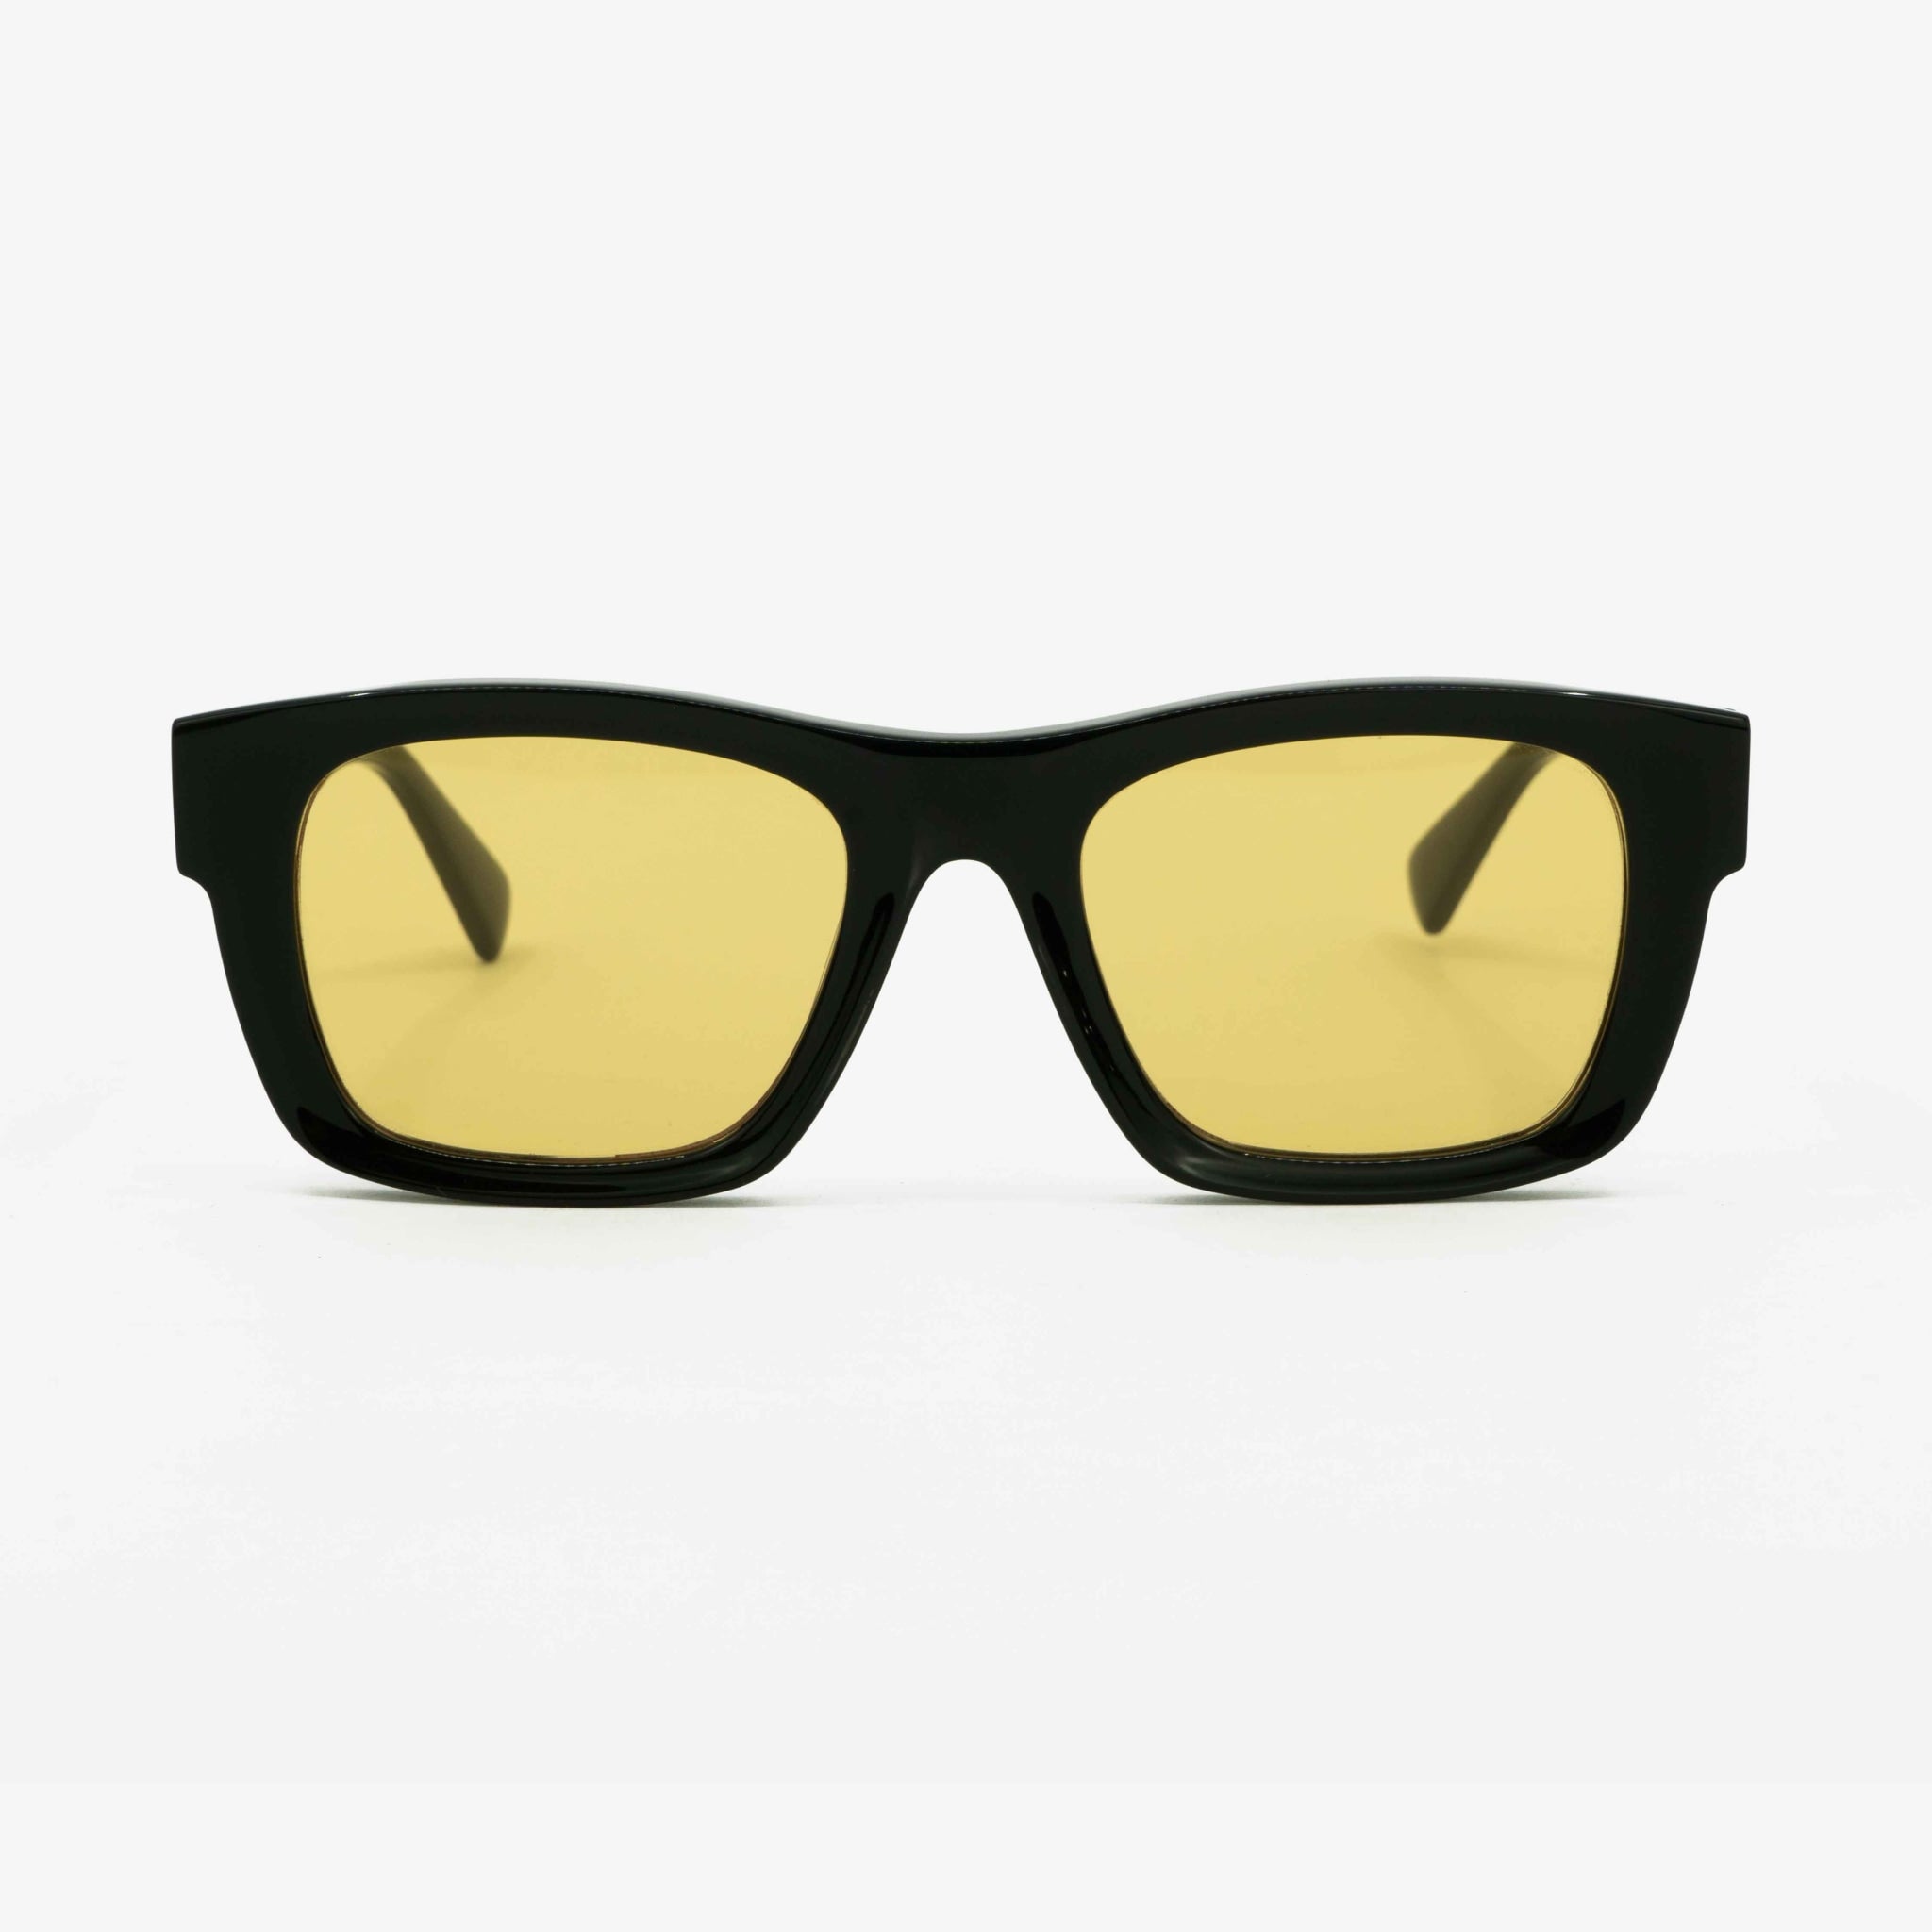 Big sunglasses modern look yellow lenses | MessyWeekend